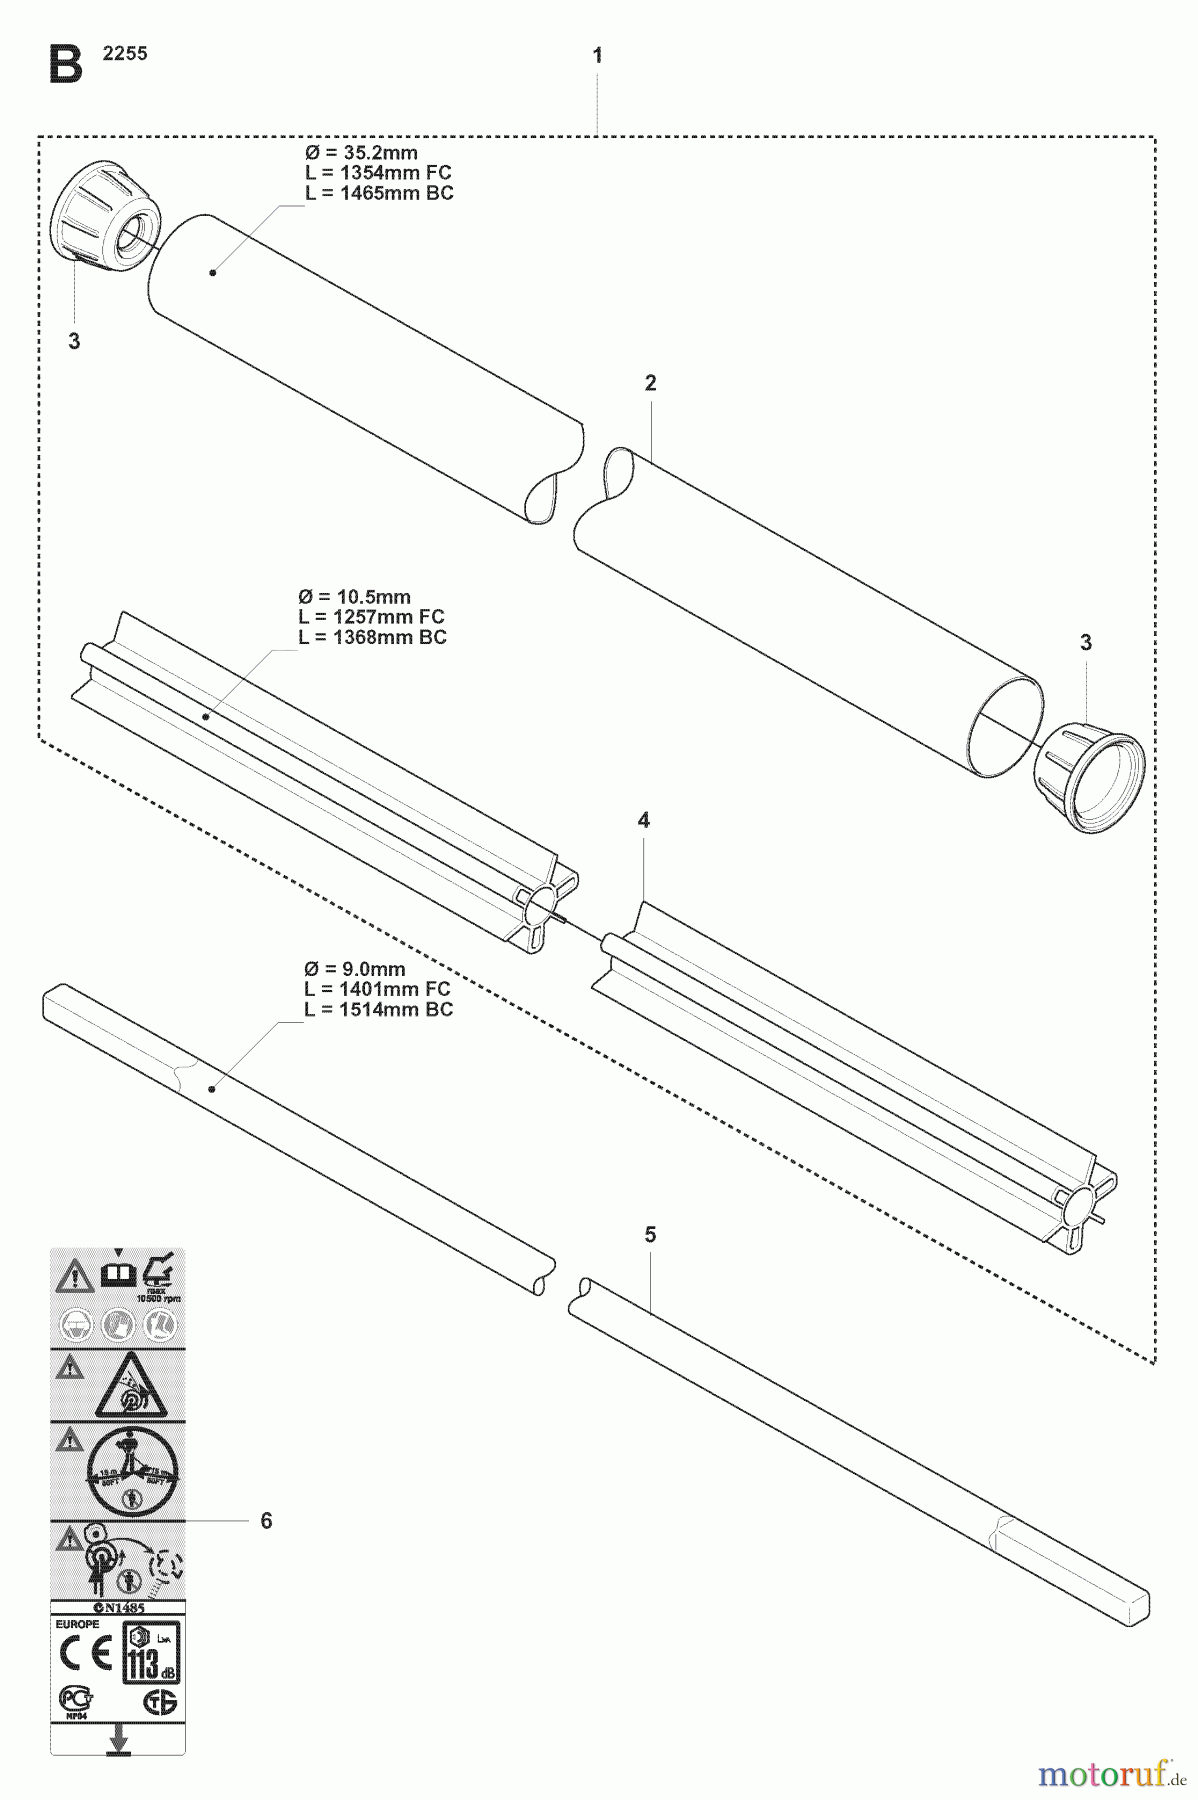  Jonsered Motorsensen, Trimmer BC2255 - Jonsered Brushcutter (2007-08) SHAFT